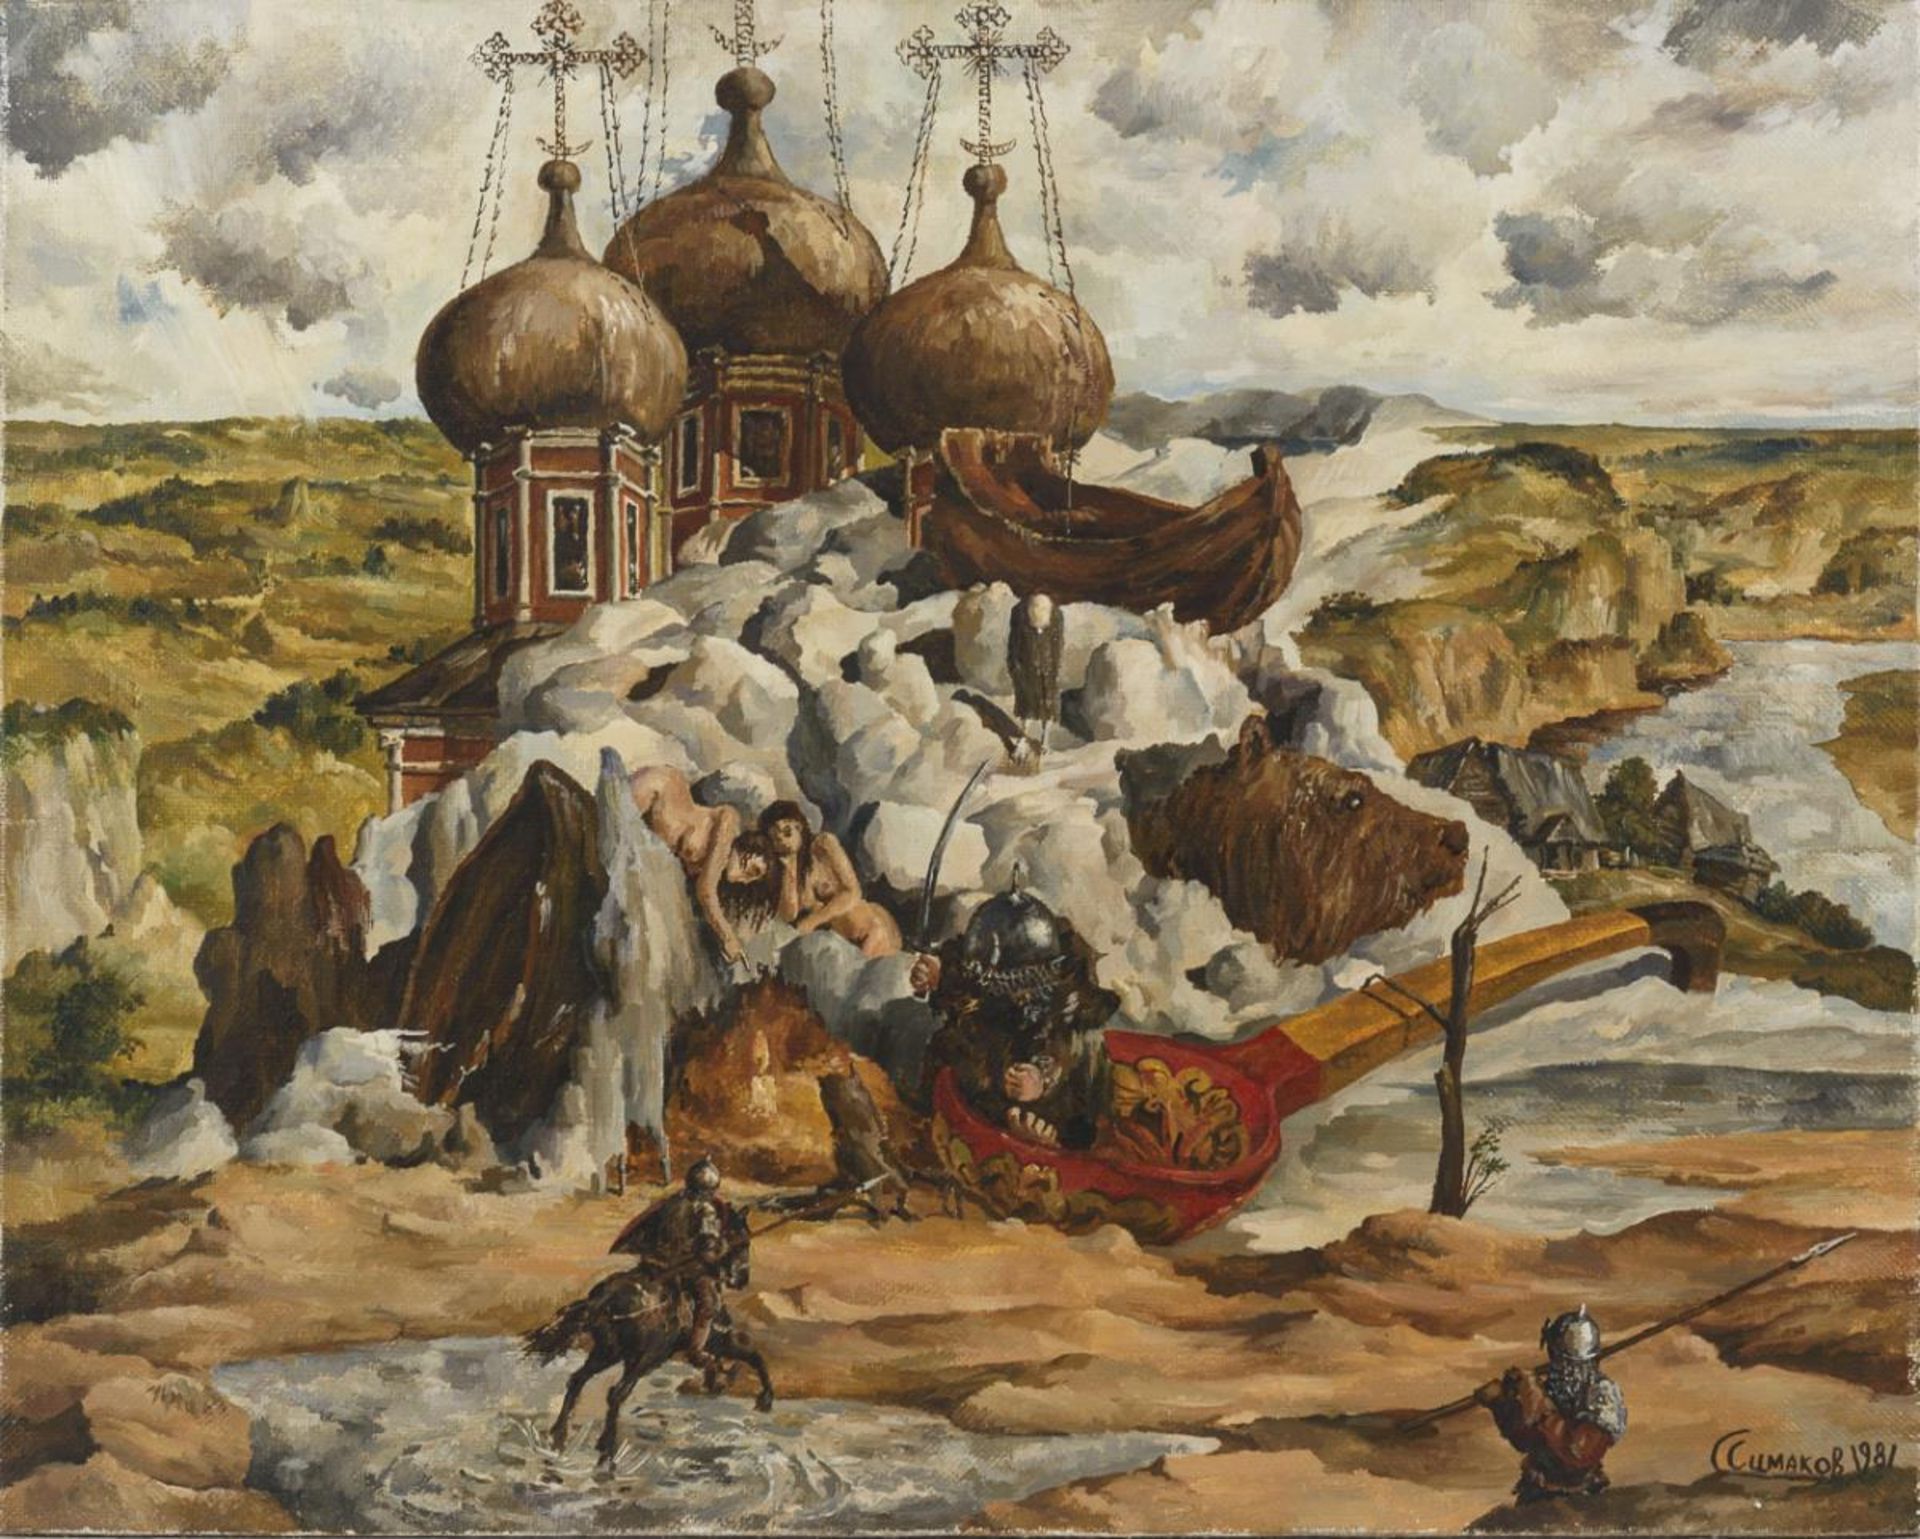 SIMAKOV, Sergey Borisovich (Симаков, Сергей Борисович) (* 1949 Moskau). "Großer Löffel".